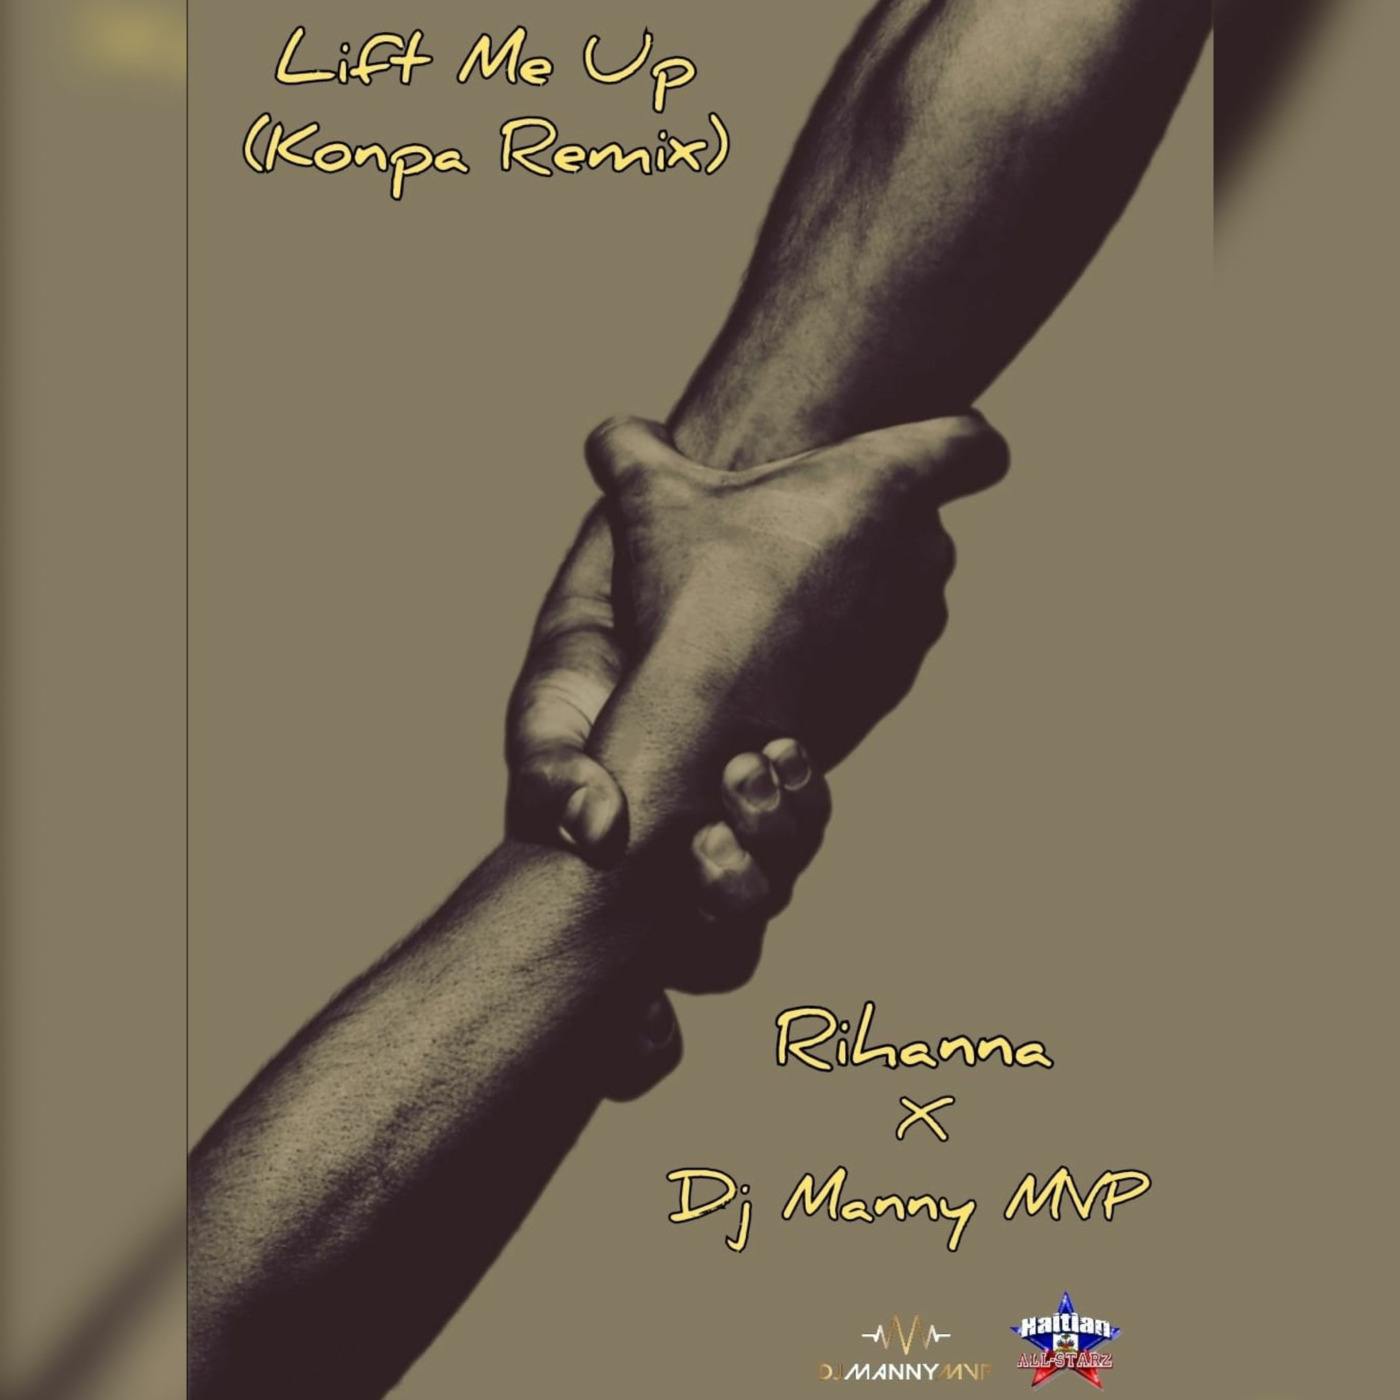 Lift Me Up (Konpa Remix) - Rihanna x DJ Manny MVP